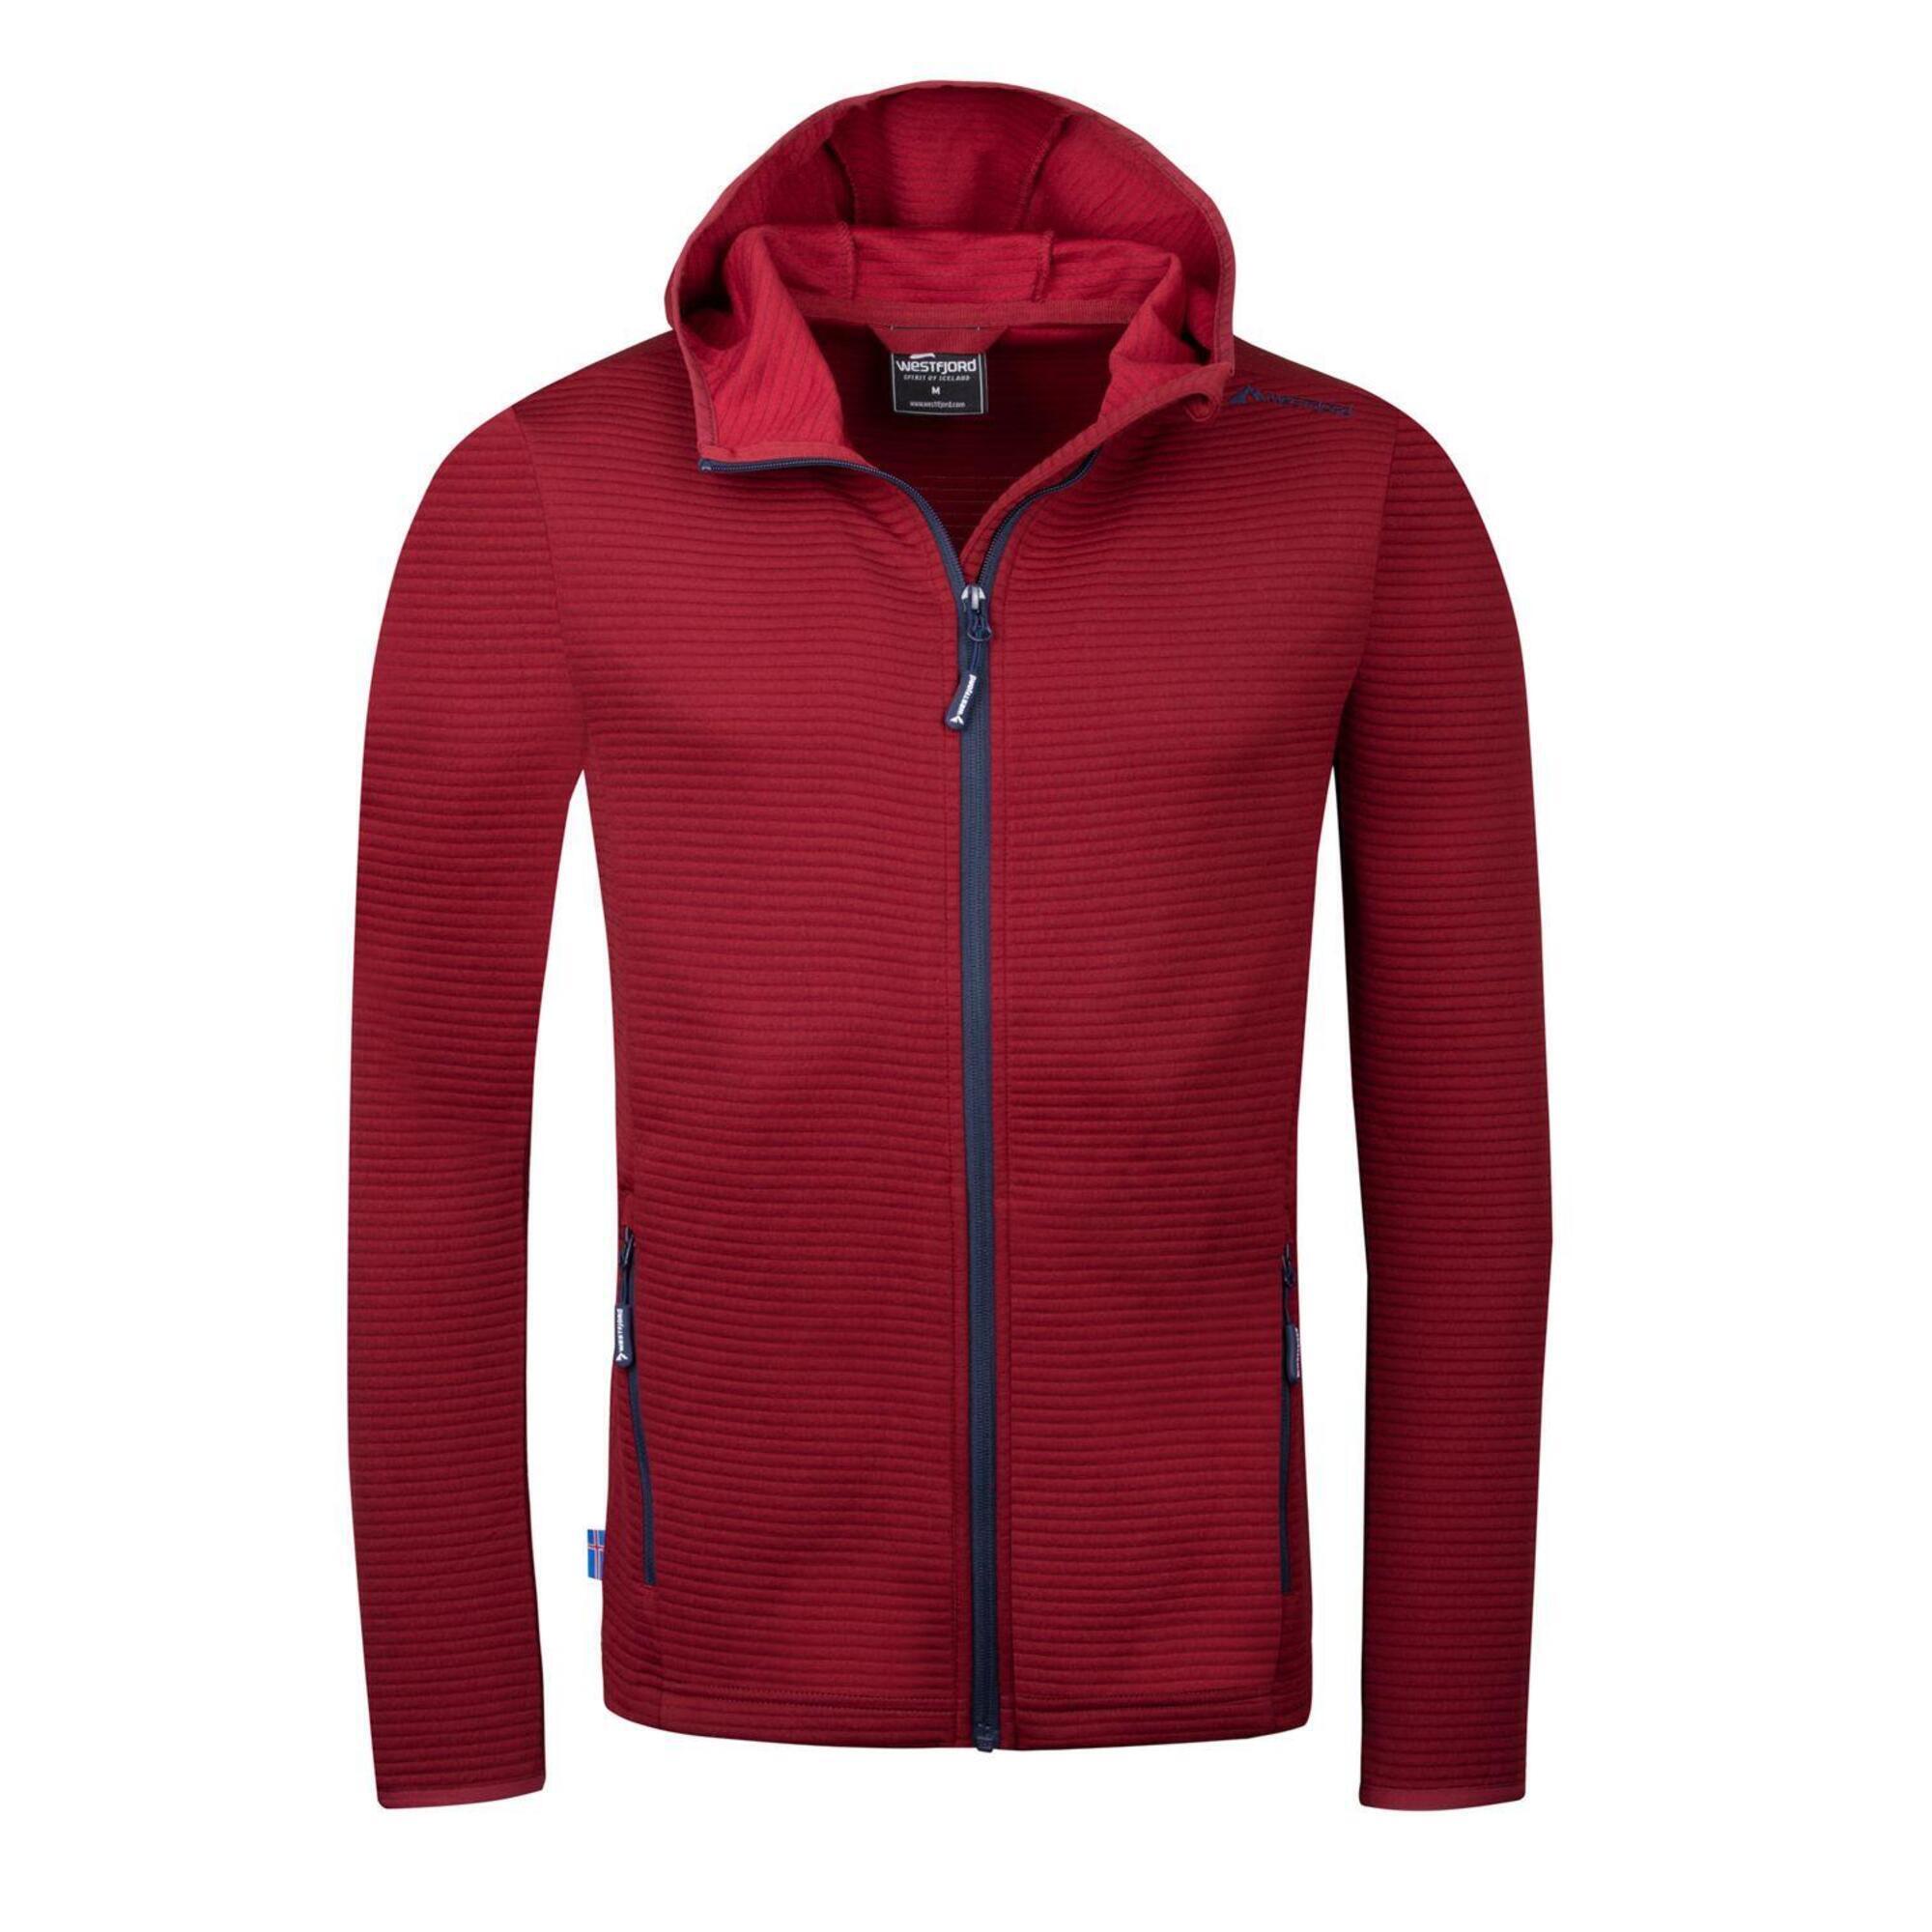 Куртка Westfjord Skardsvik мужская флисовая, красный куртка флисовая мужская lancaster черная размер s